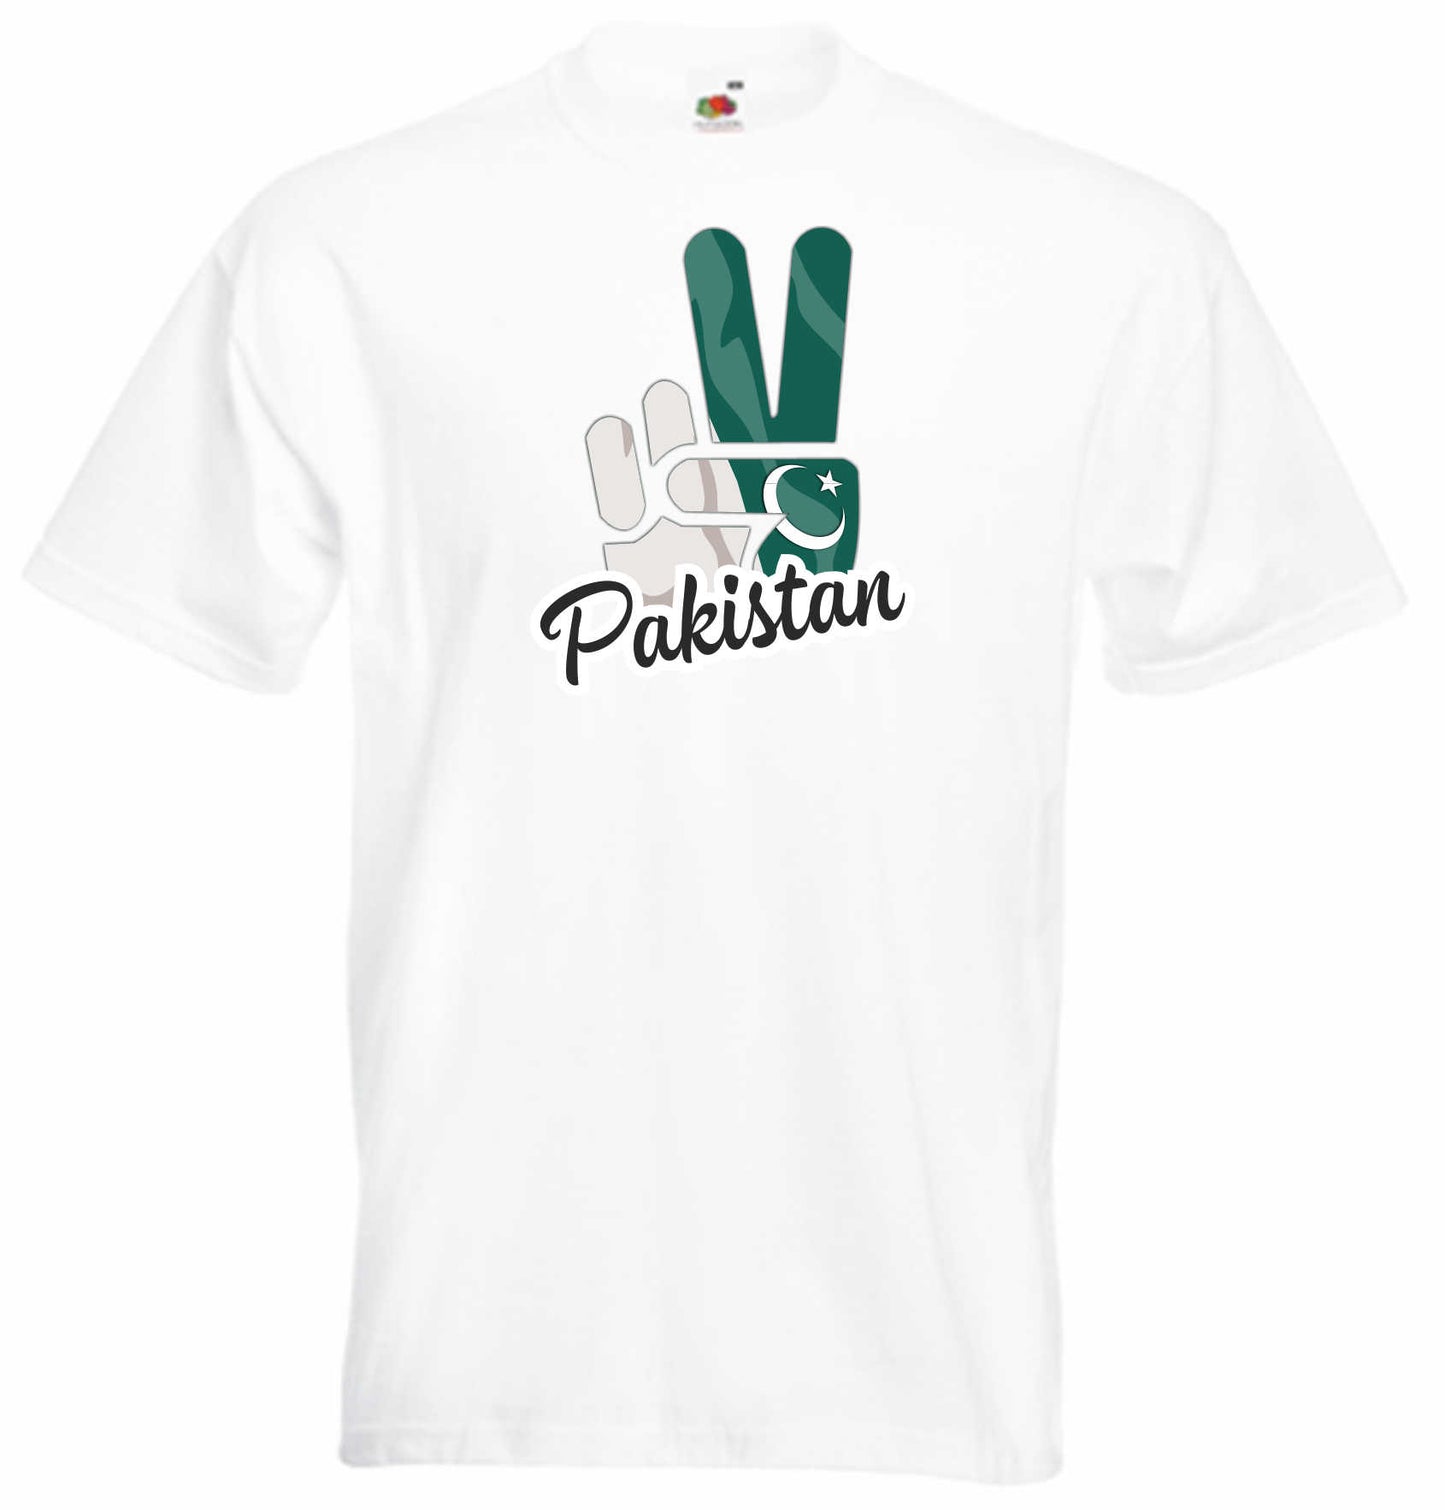 T-Shirt Herren - Victory - Flagge / Fahne - Pakistan - Sieg